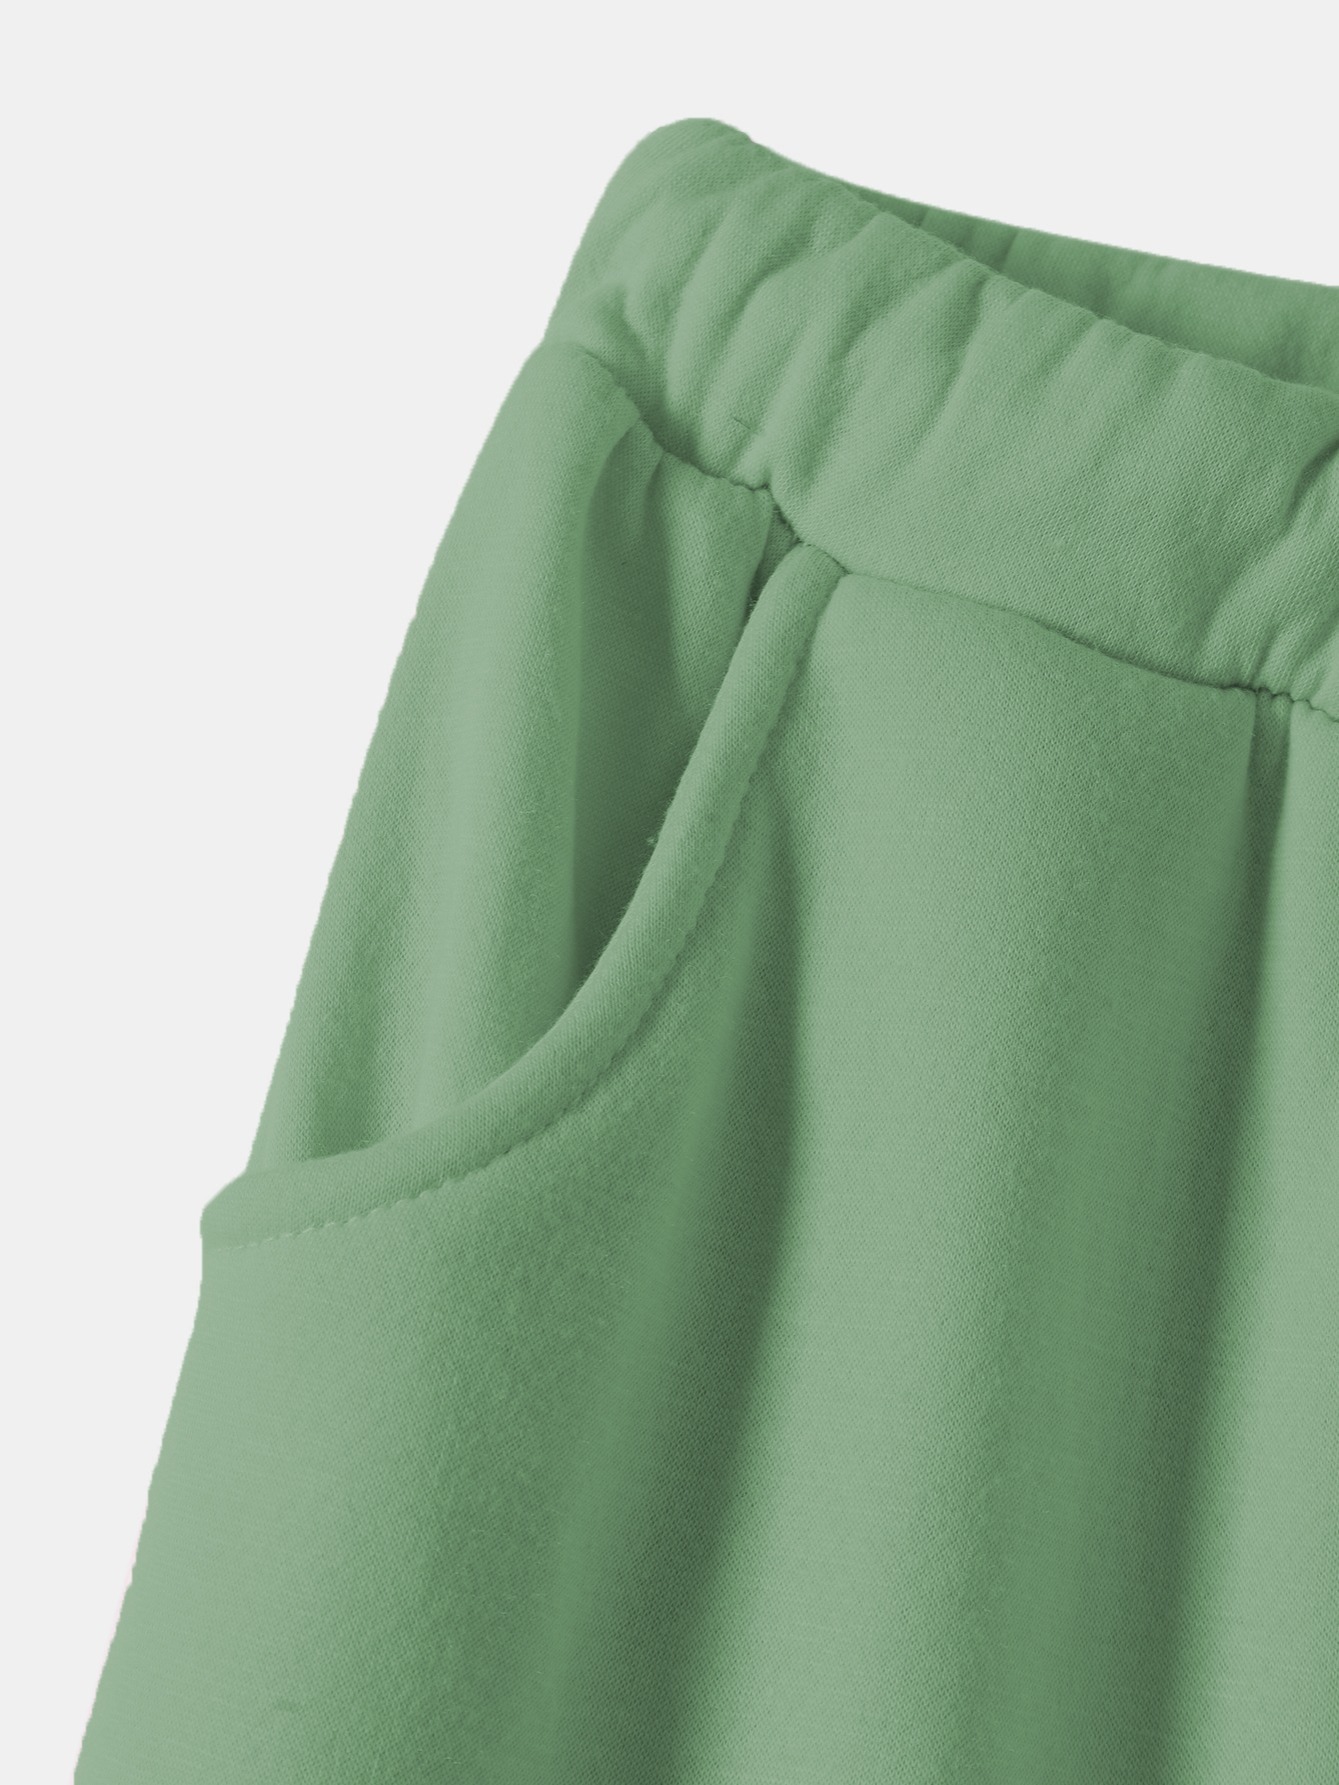 solid drawstring thermal sweatpants versatile loose comfy jogger pants womens clothing details 17